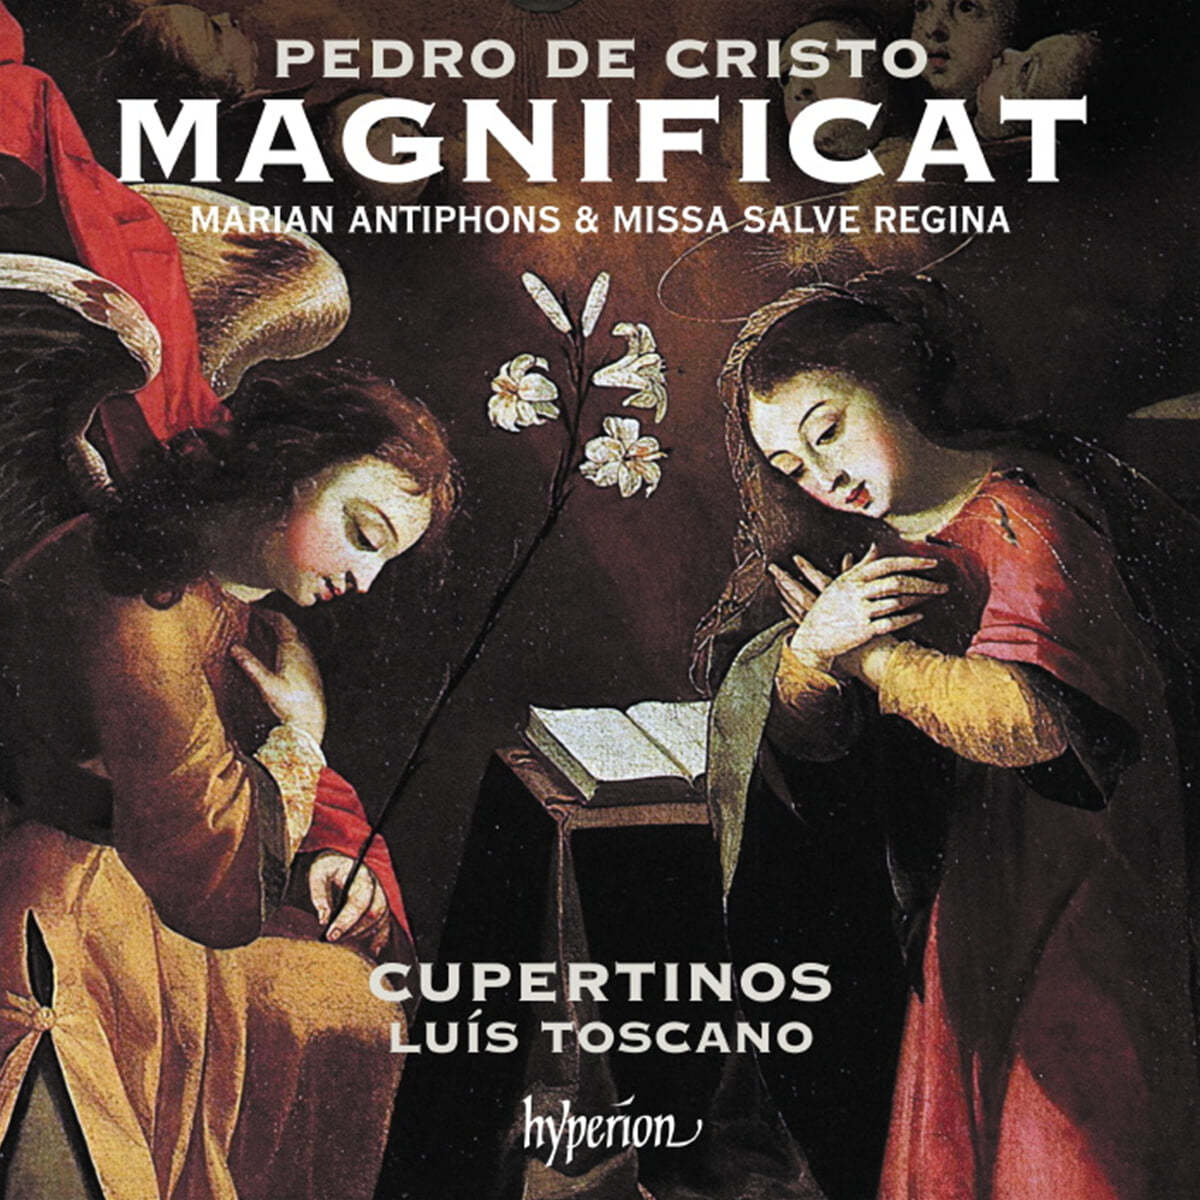 Luis Toscano 페드로 데 크리스토: 마니피카트 (Pedro De Cristo: Magnificat, Marian Antiphons &amp; Missa Salve Regina)